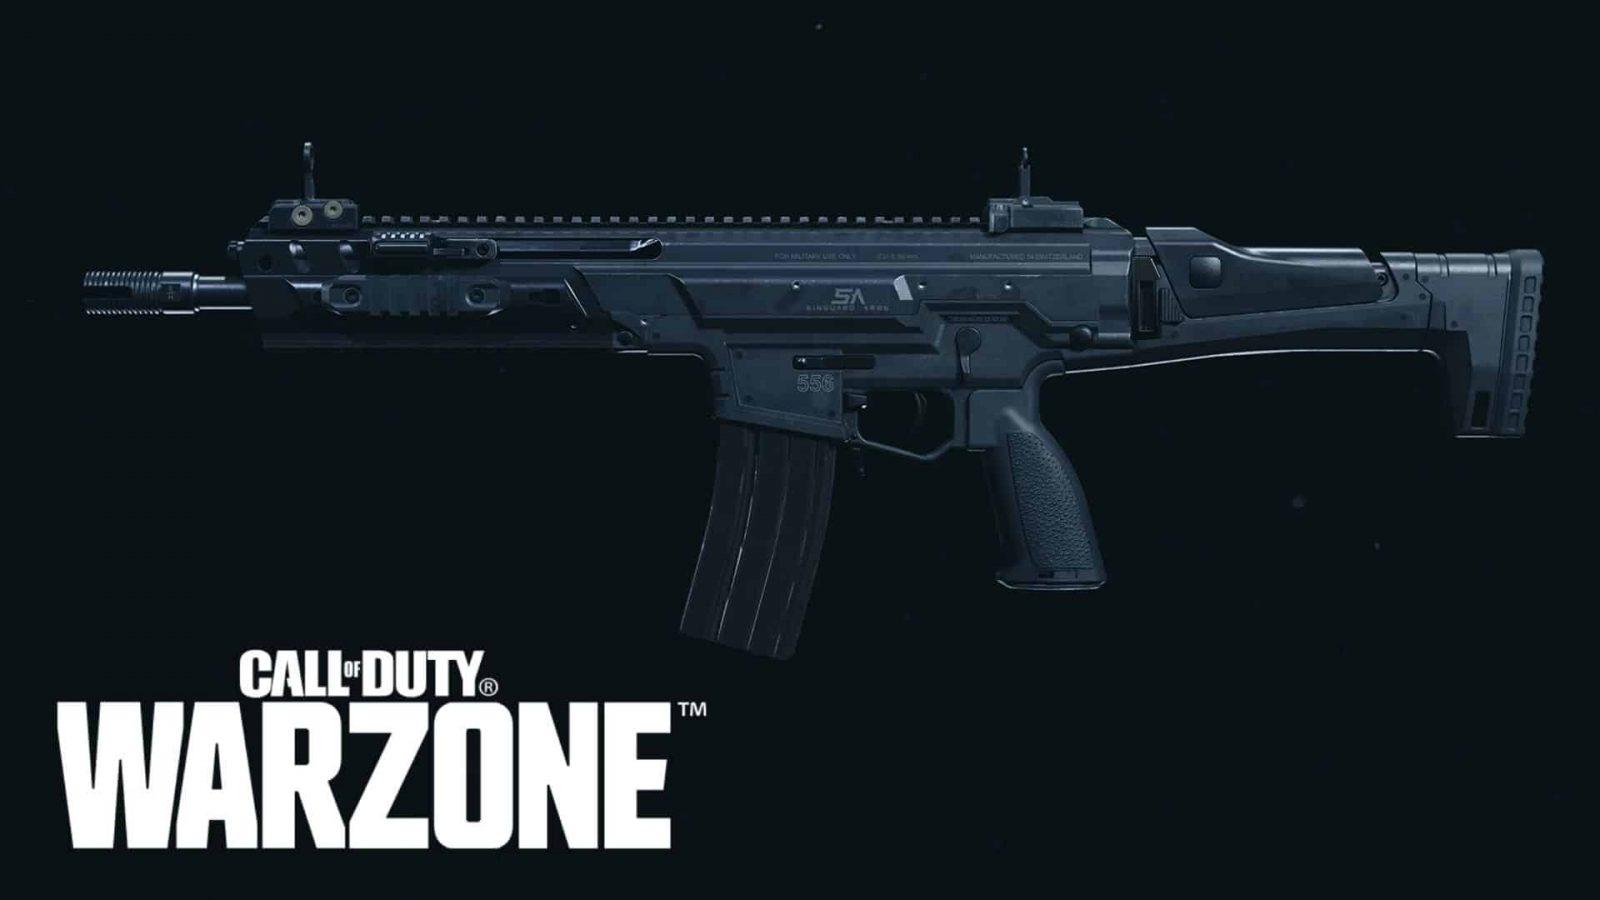 call of duty warzone kilo 141 assault rifle